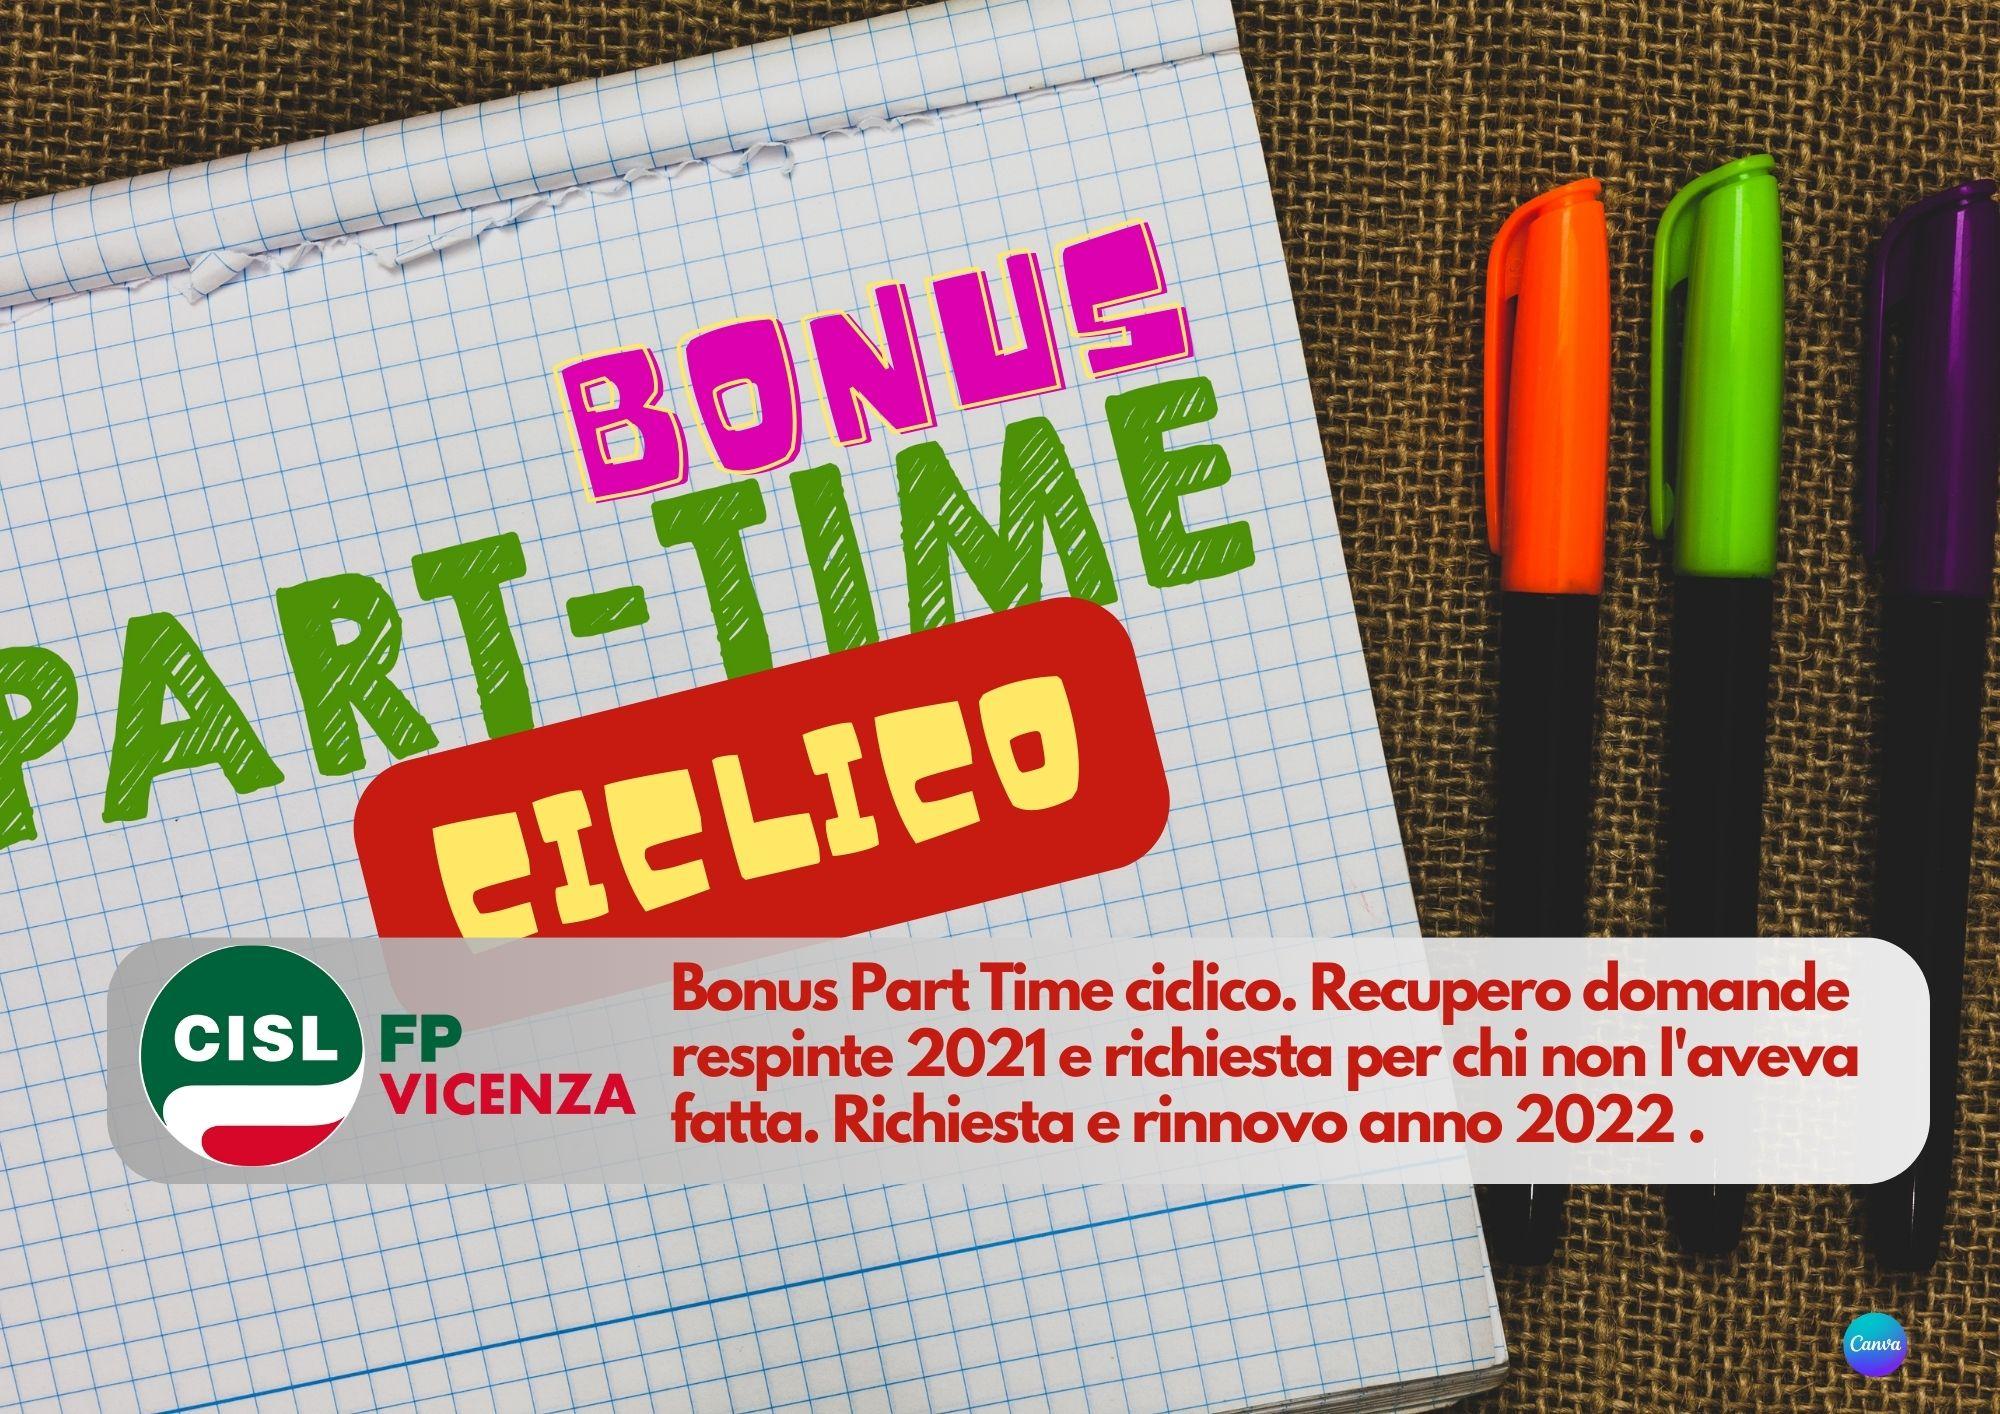 CISL FP Vicenza. Bonus Part Time ciclico. Recupero domande respinte 2021 e rinnovo anno 2022